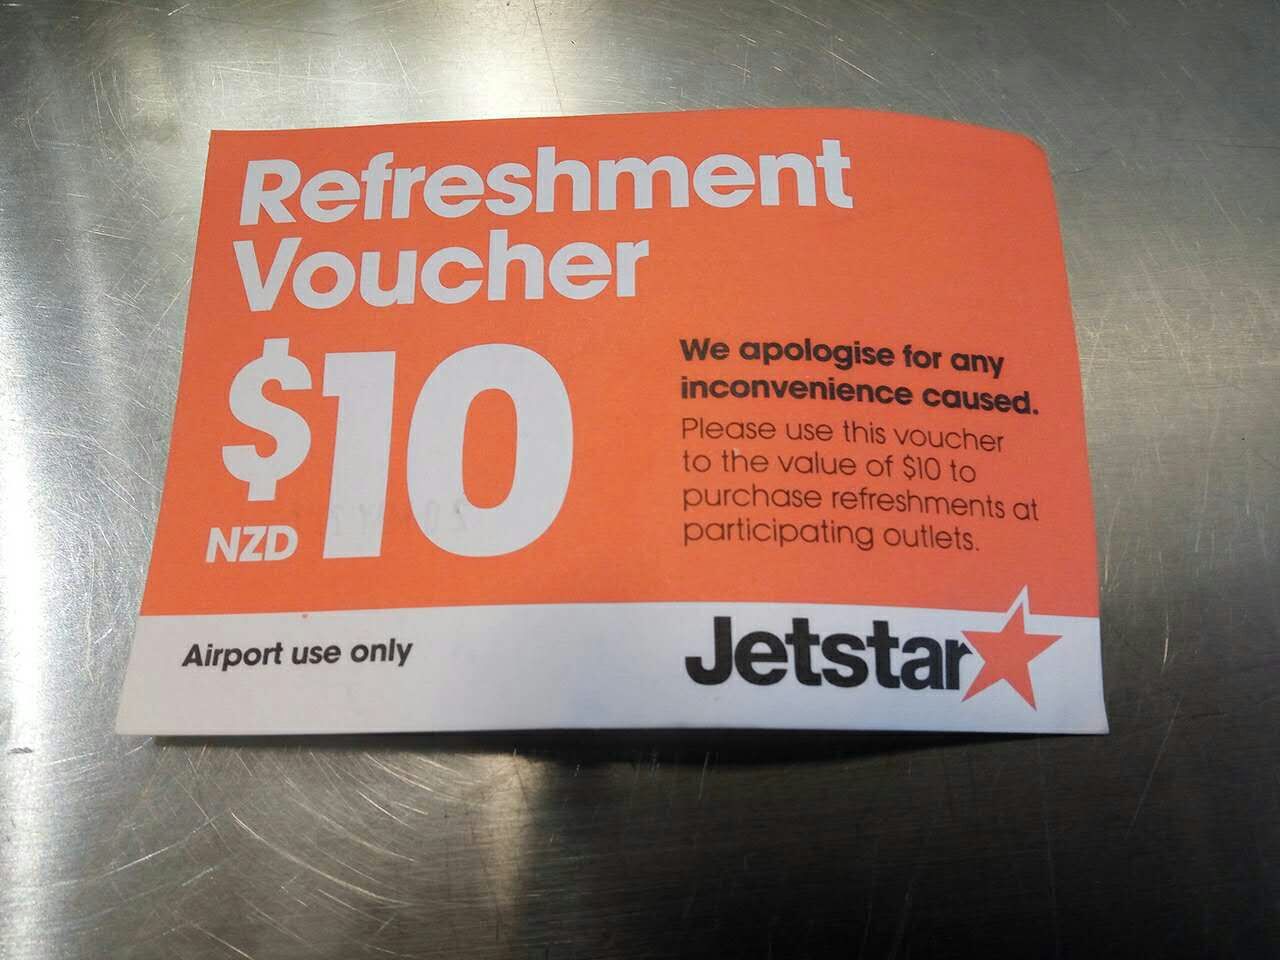 The Flight delay compensation by Jetstar – a $10 voucher!